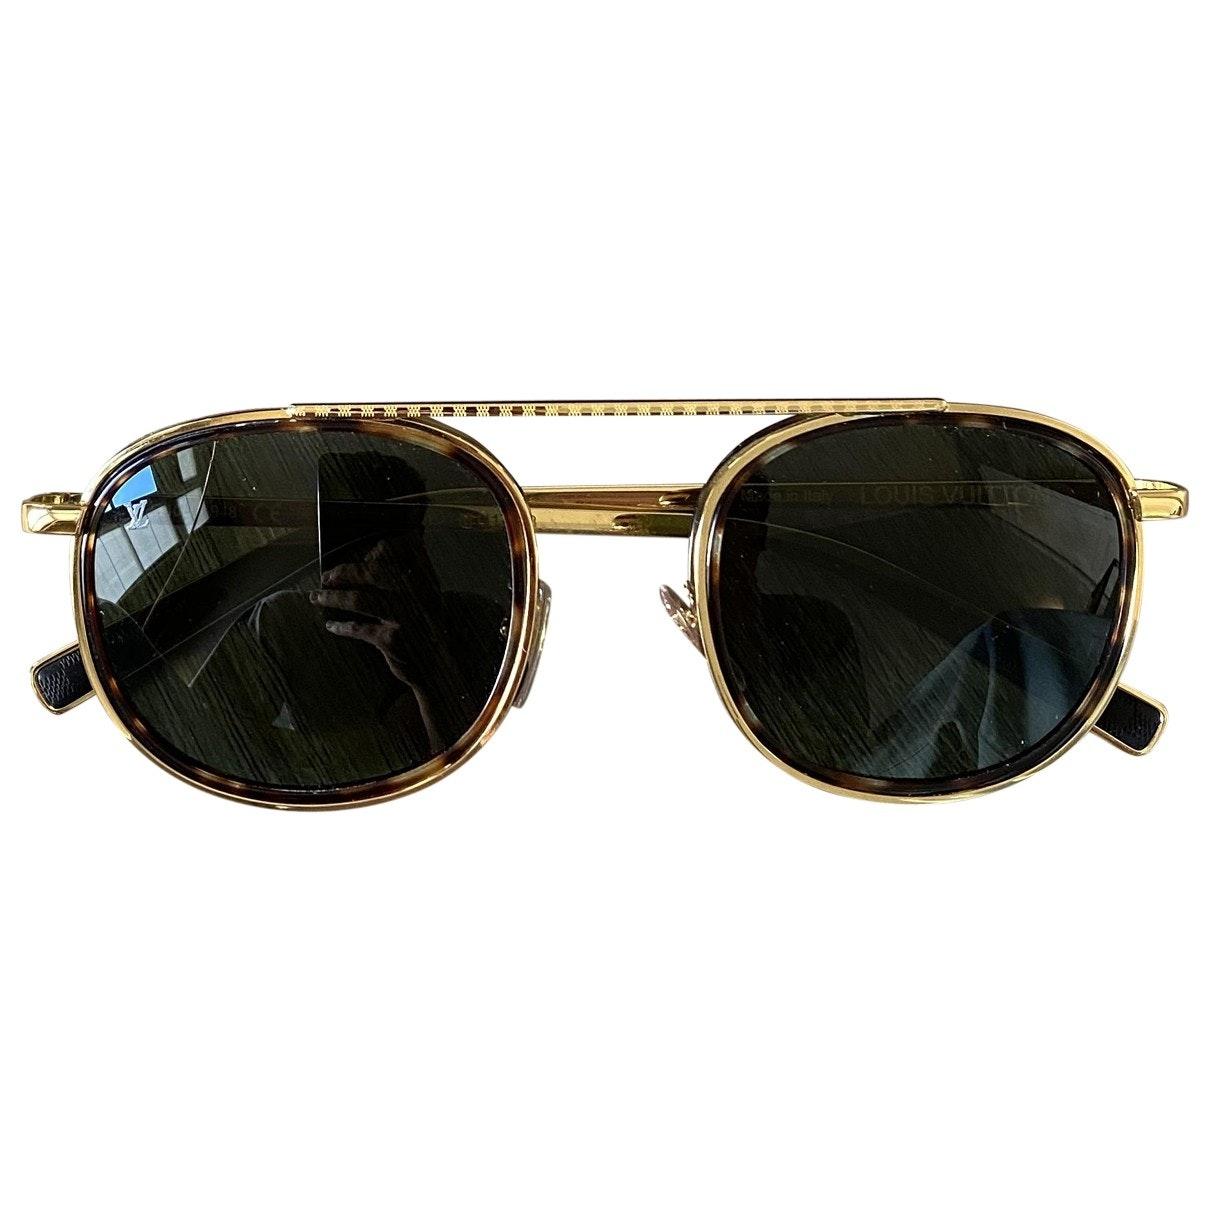 Louis Vuitton Sunglasses in Gold (Metallic) for Men - Lyst